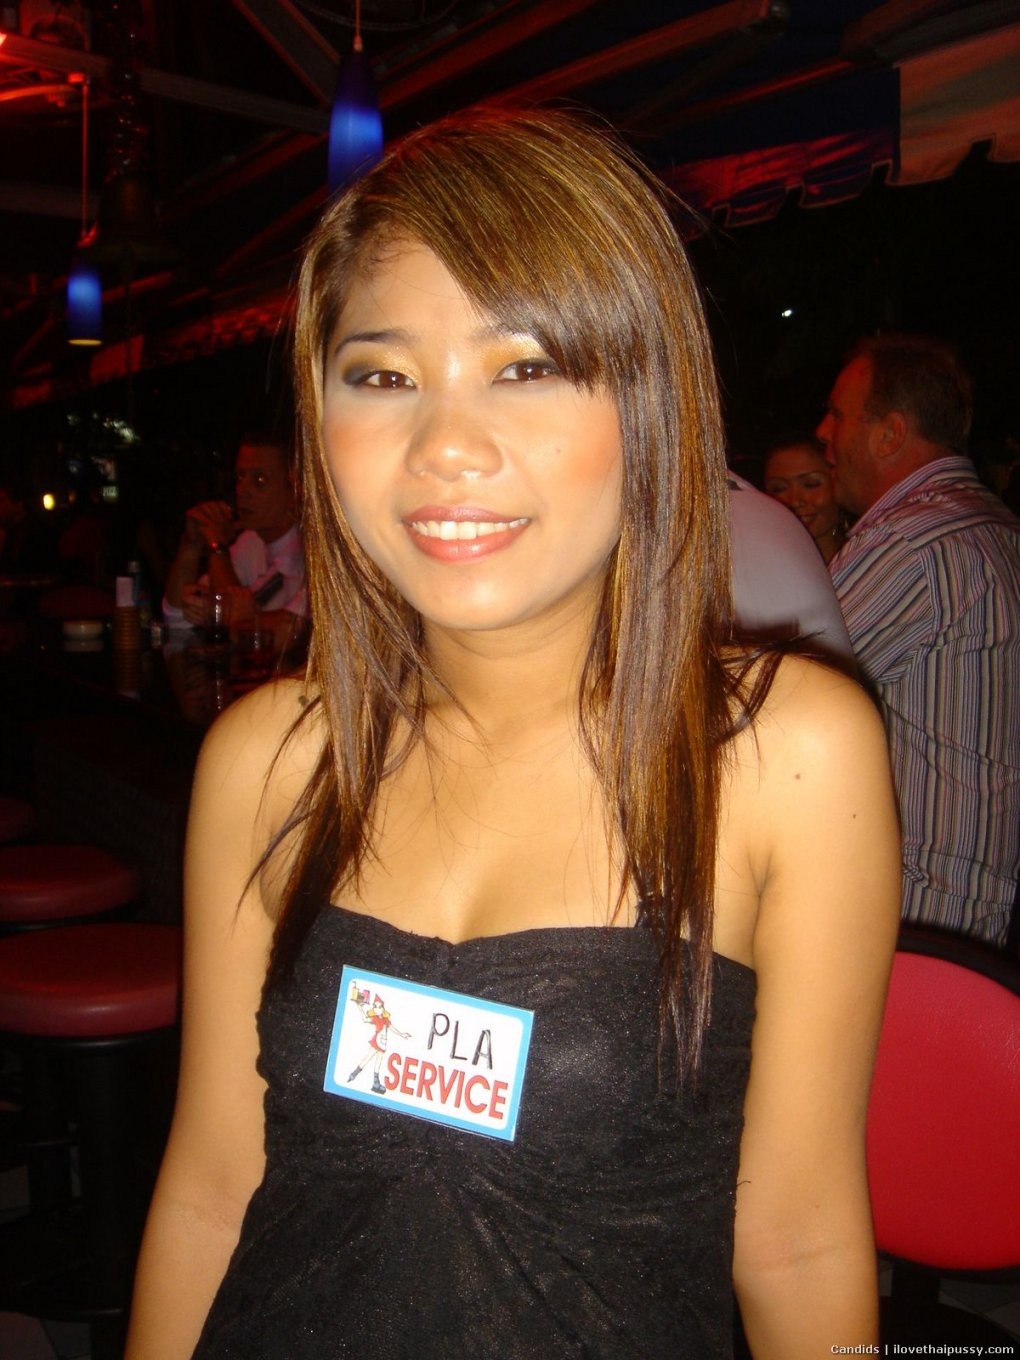 Putas tailandesas reales folladas a pelo por turistas locos sexo amateur prostitutas asiáticas
 #68153393